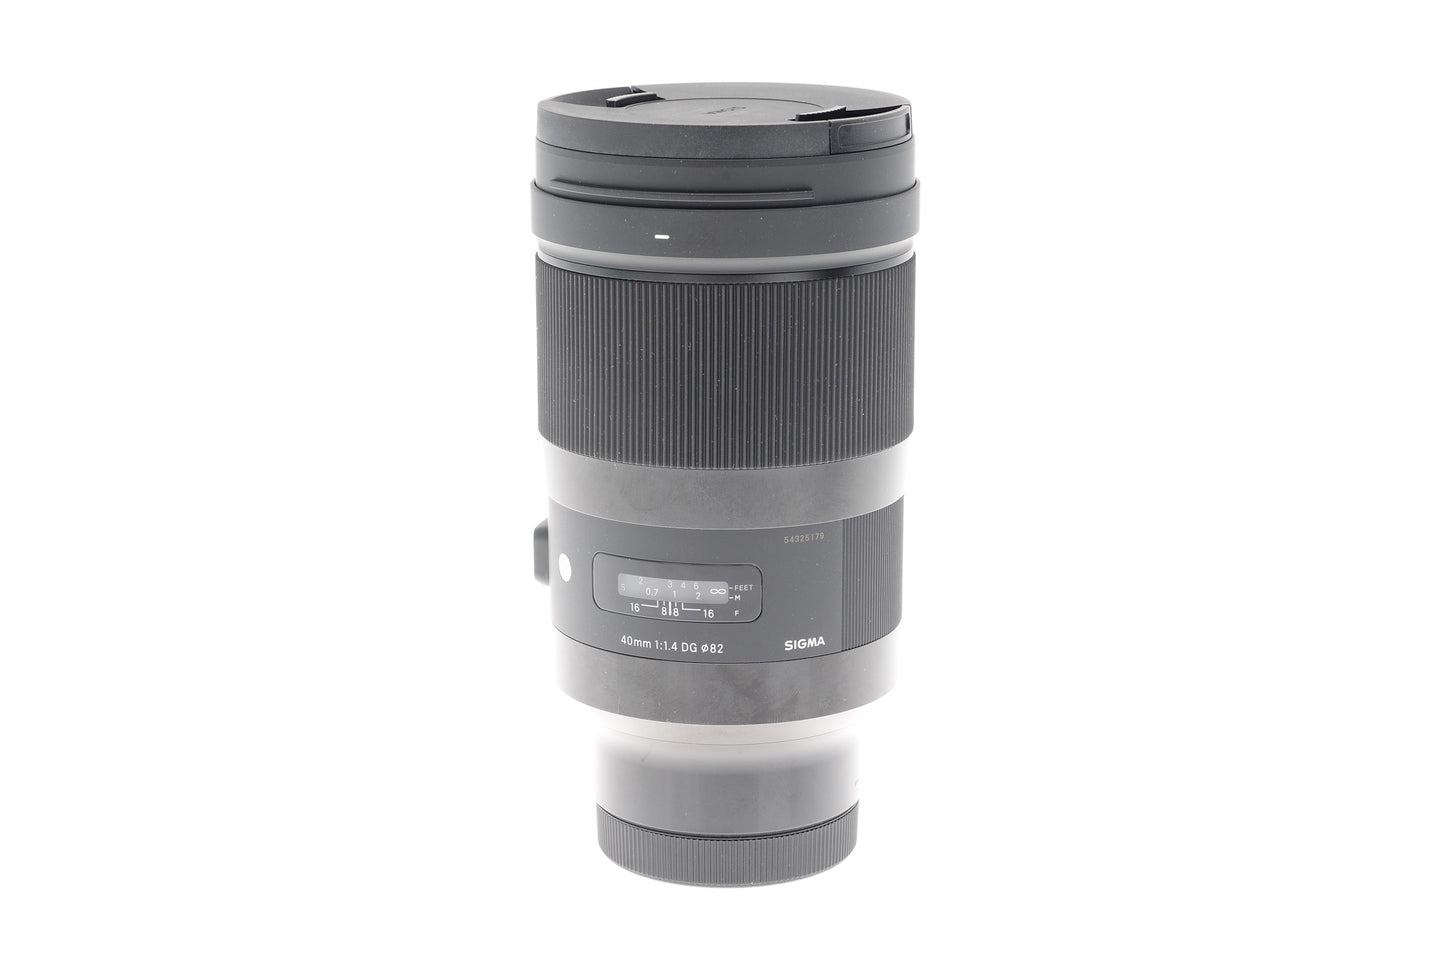 Sigma 40mm f1.4 DG HSM Art - Lens